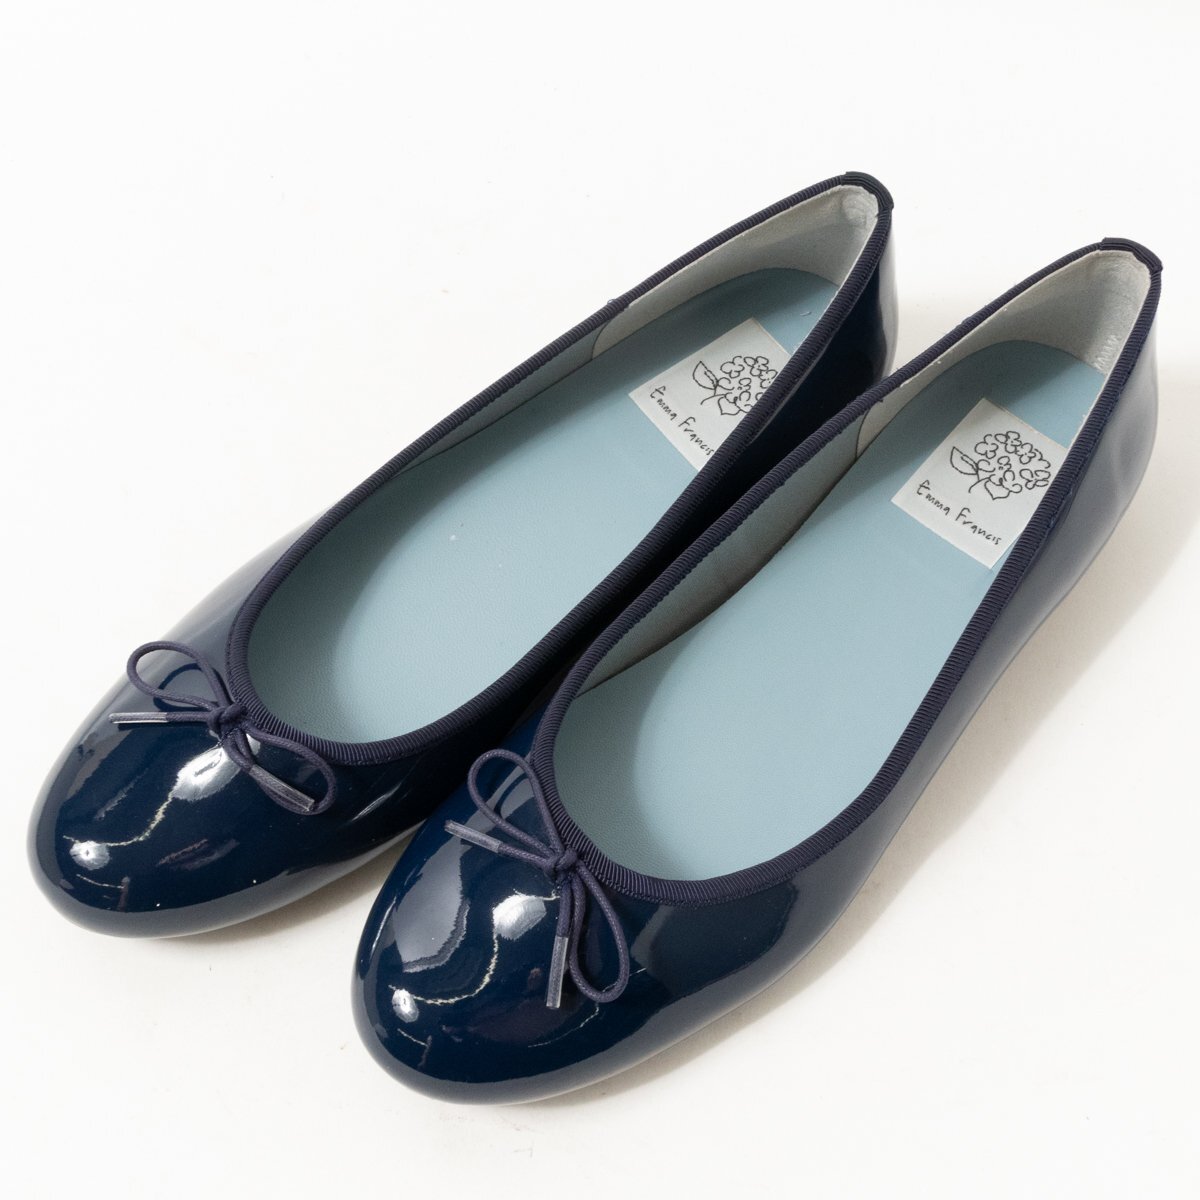 Emma Francisema Francis rain shoes pumps bare- shoes 24.0cm synthetic leather blue group casual ga- Lee lady's women's shoes 